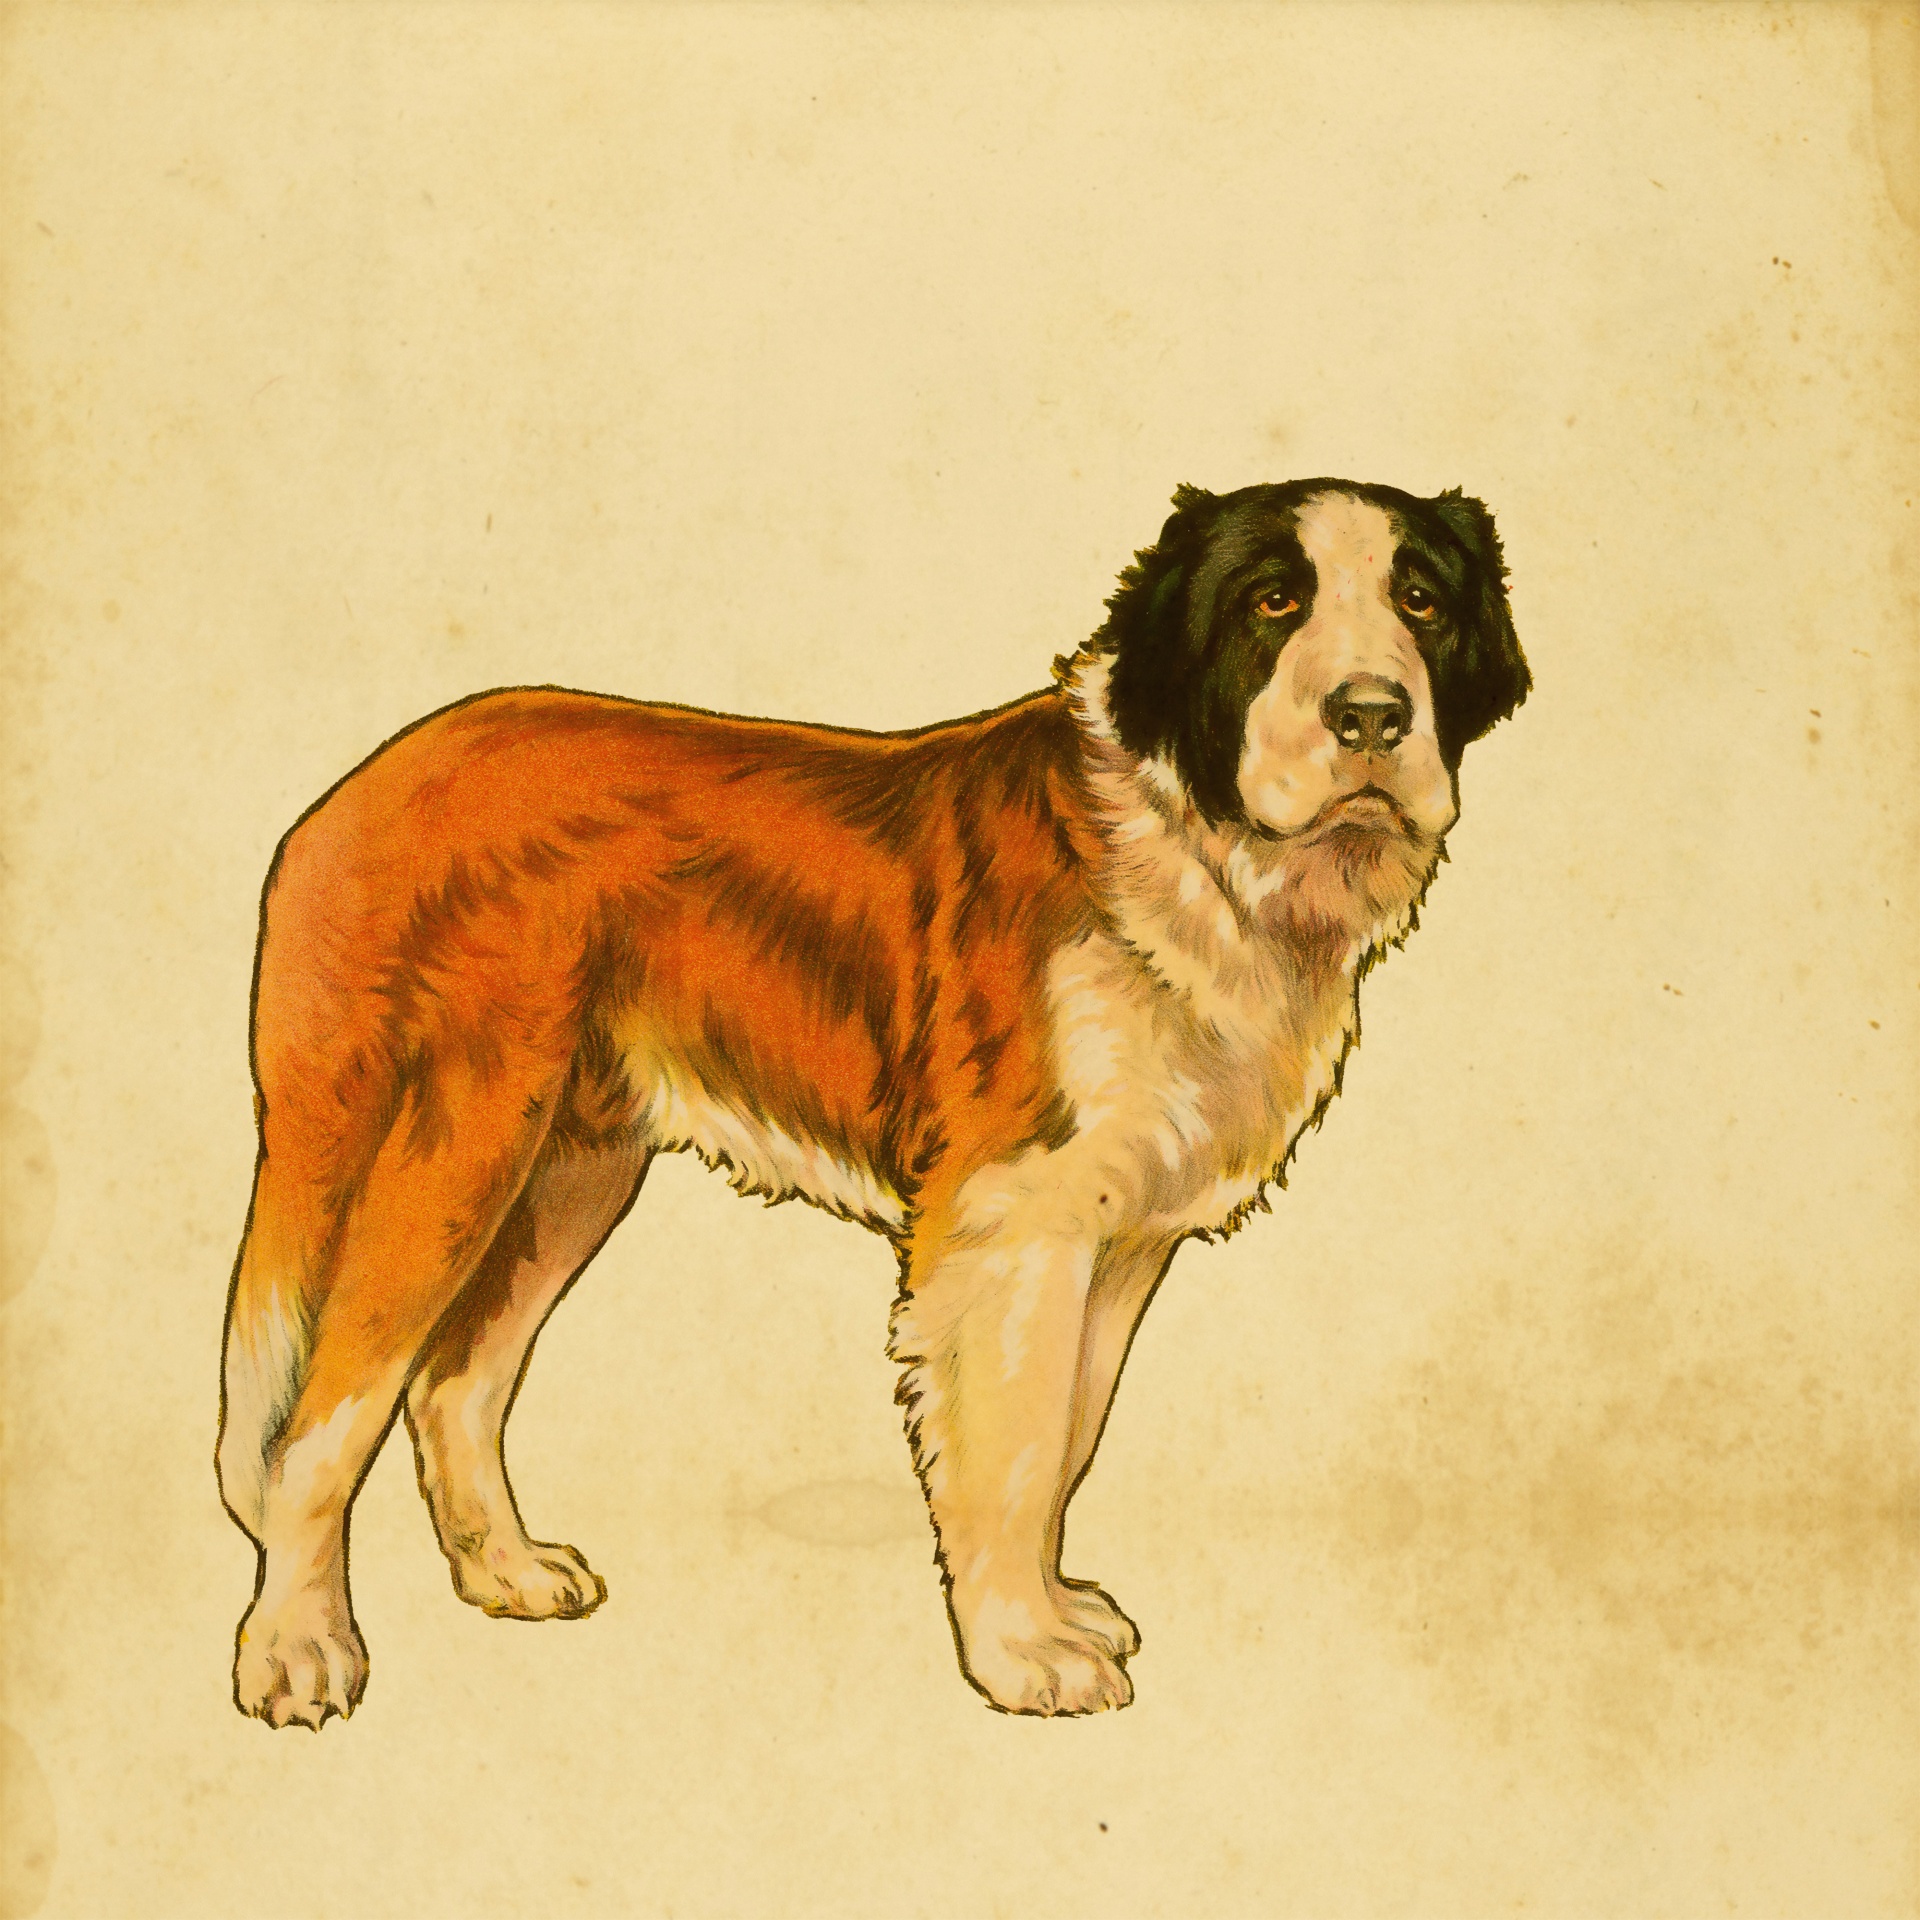 Vintage illustration of a saint bernard dog clipart isolated on antique paper background